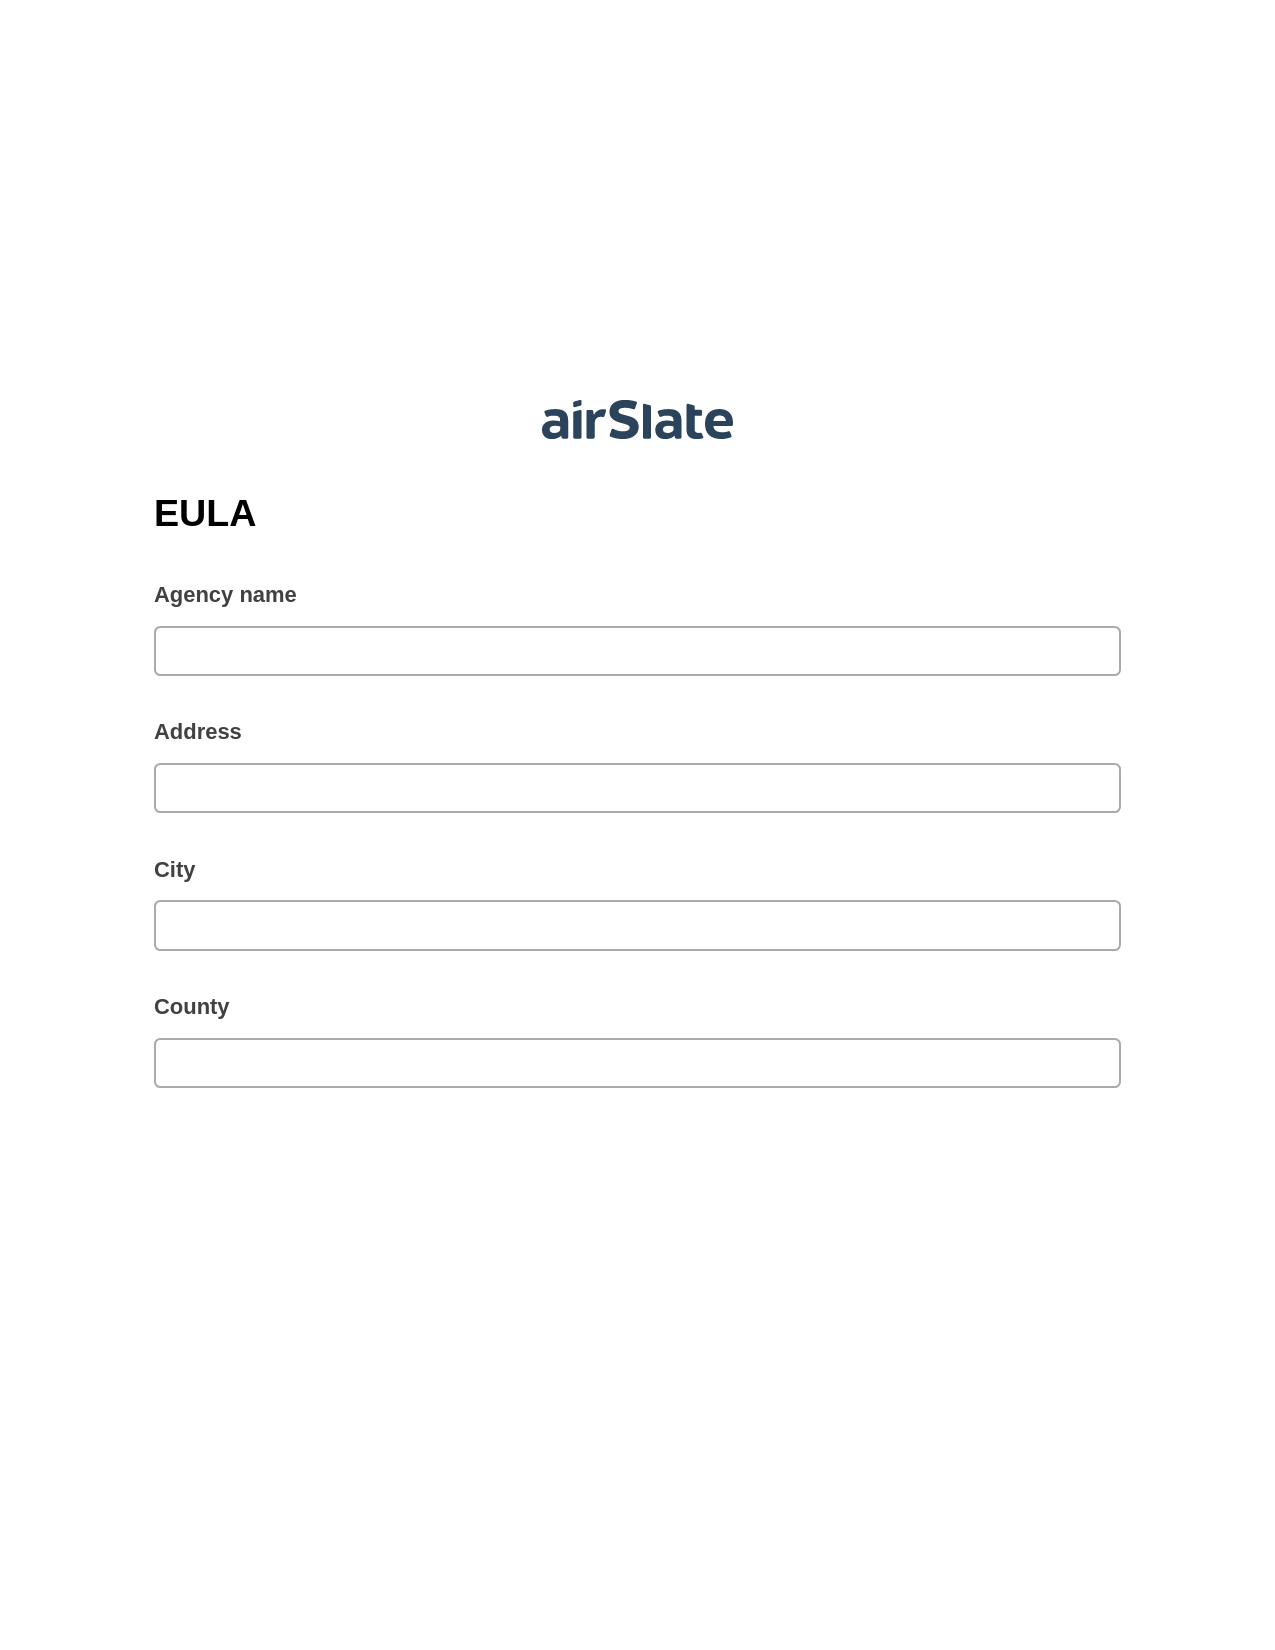 Multirole EULA Pre-fill from Google Sheet Dropdown Options Bot, Create NetSuite Records Bot, OneDrive Bot